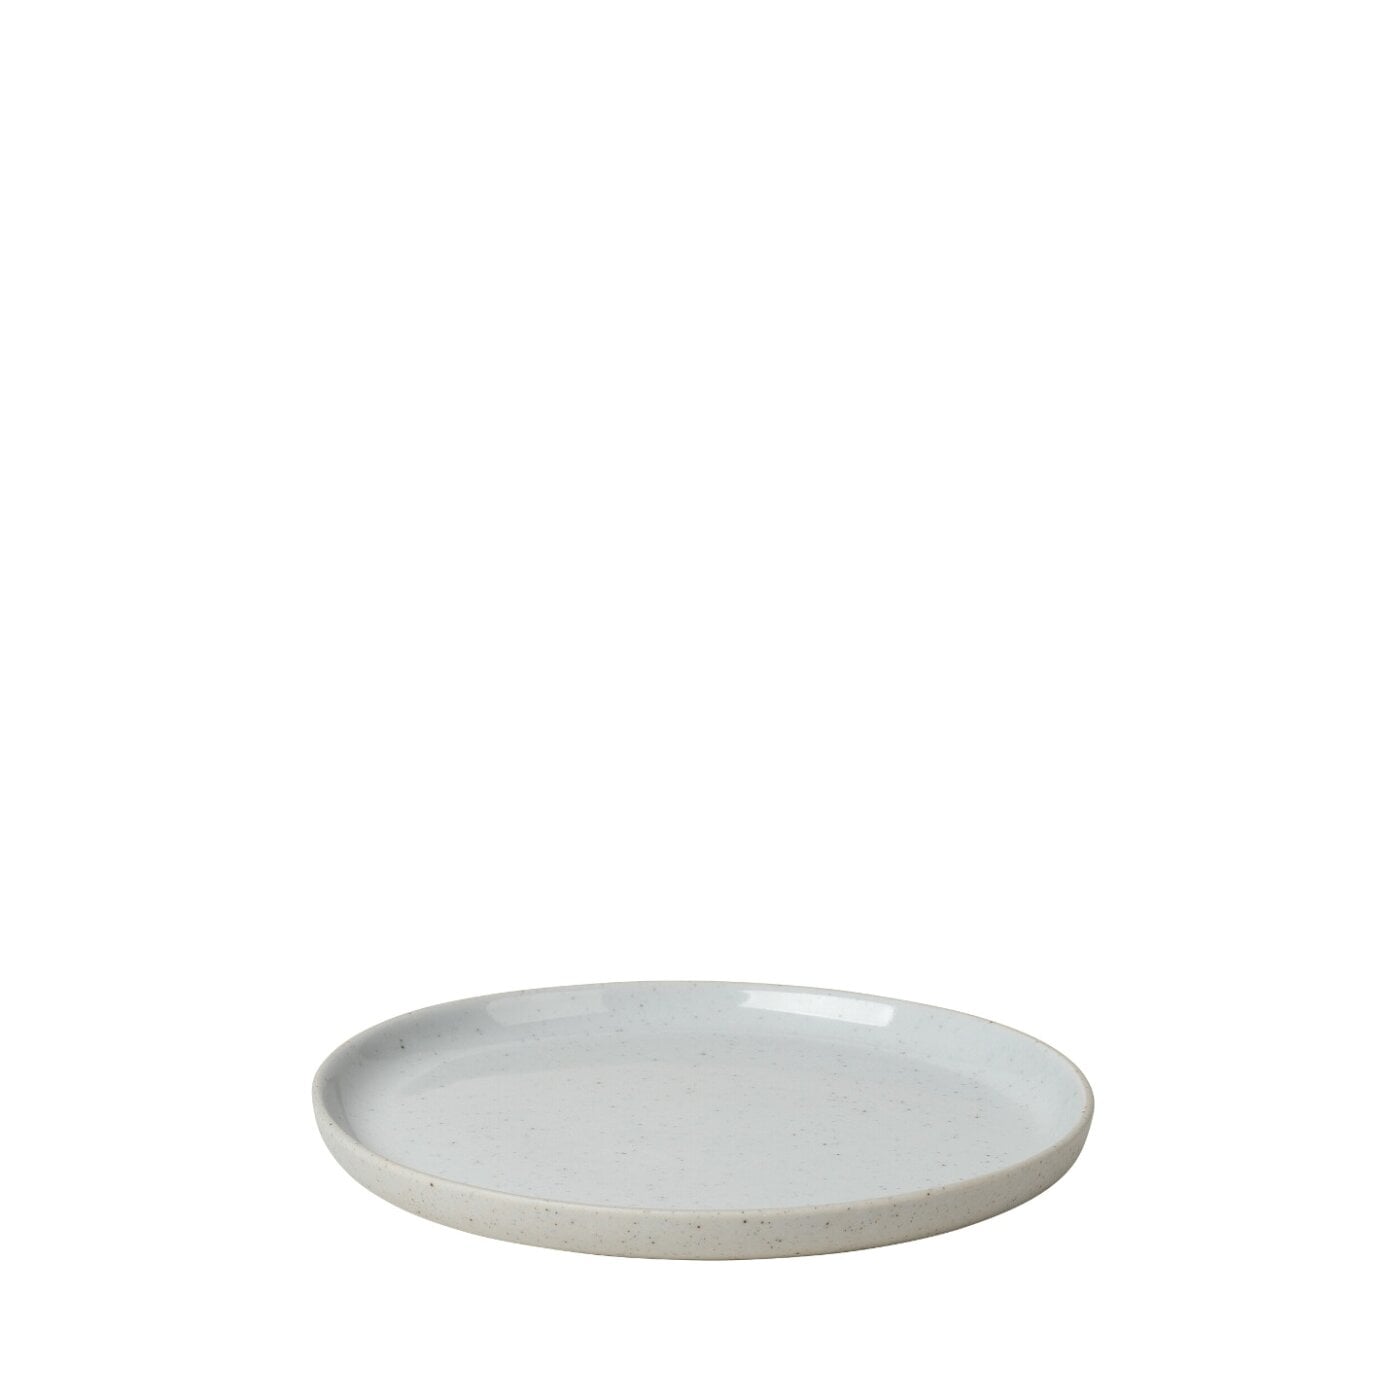 SABLO Side Plate 140 mm / 5.5 in